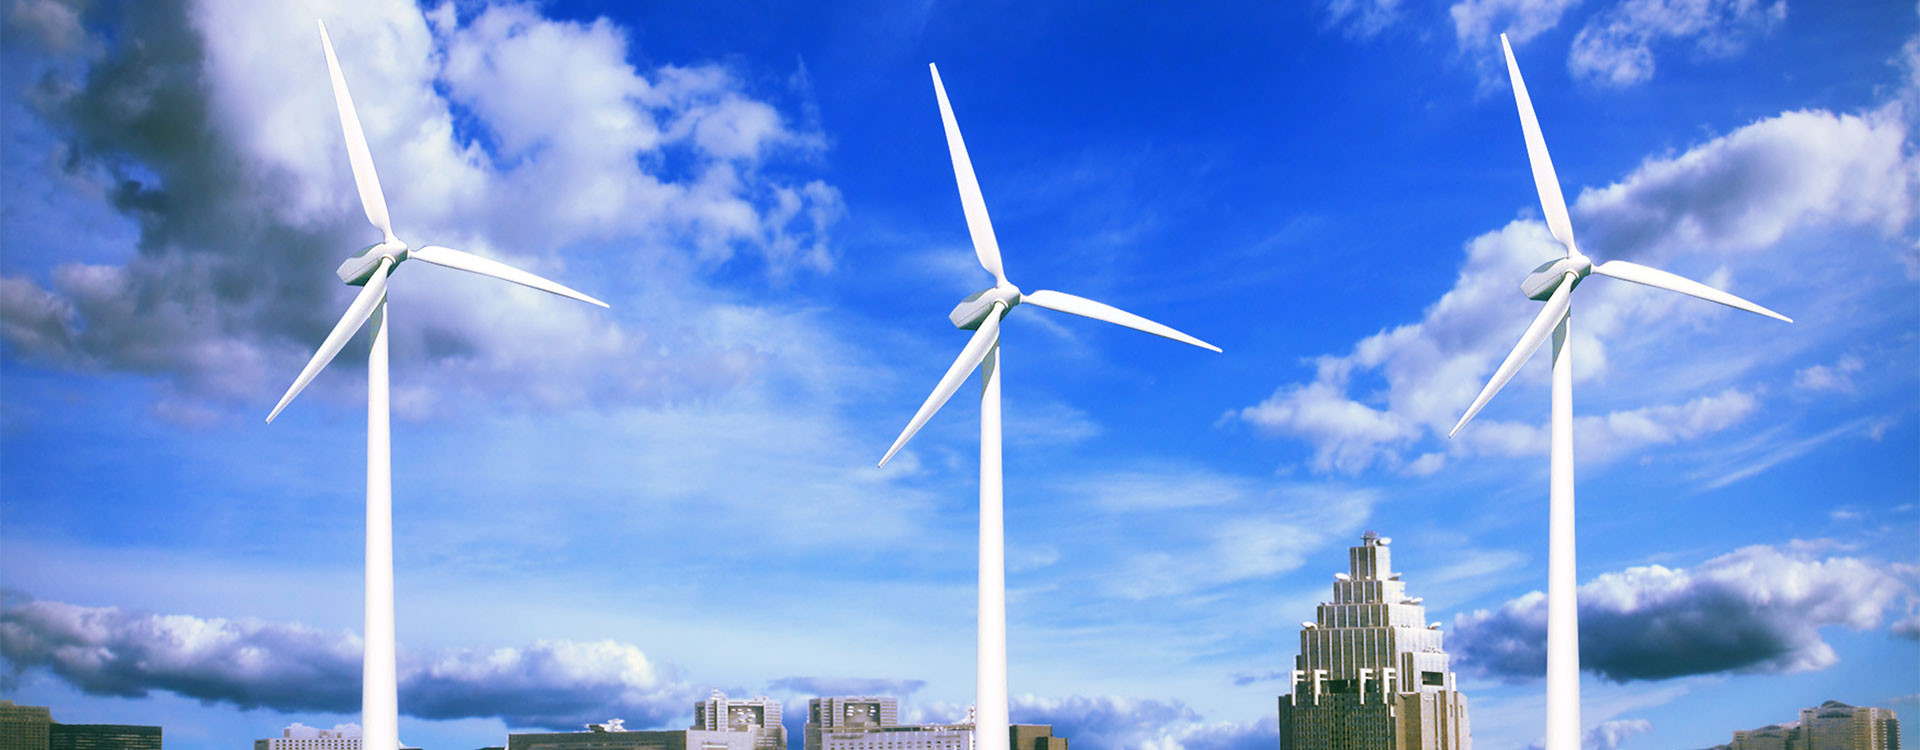 Developing and VirtuallyTesting WindmillTechnology Increase Operation &amp; Reduce Maintenance